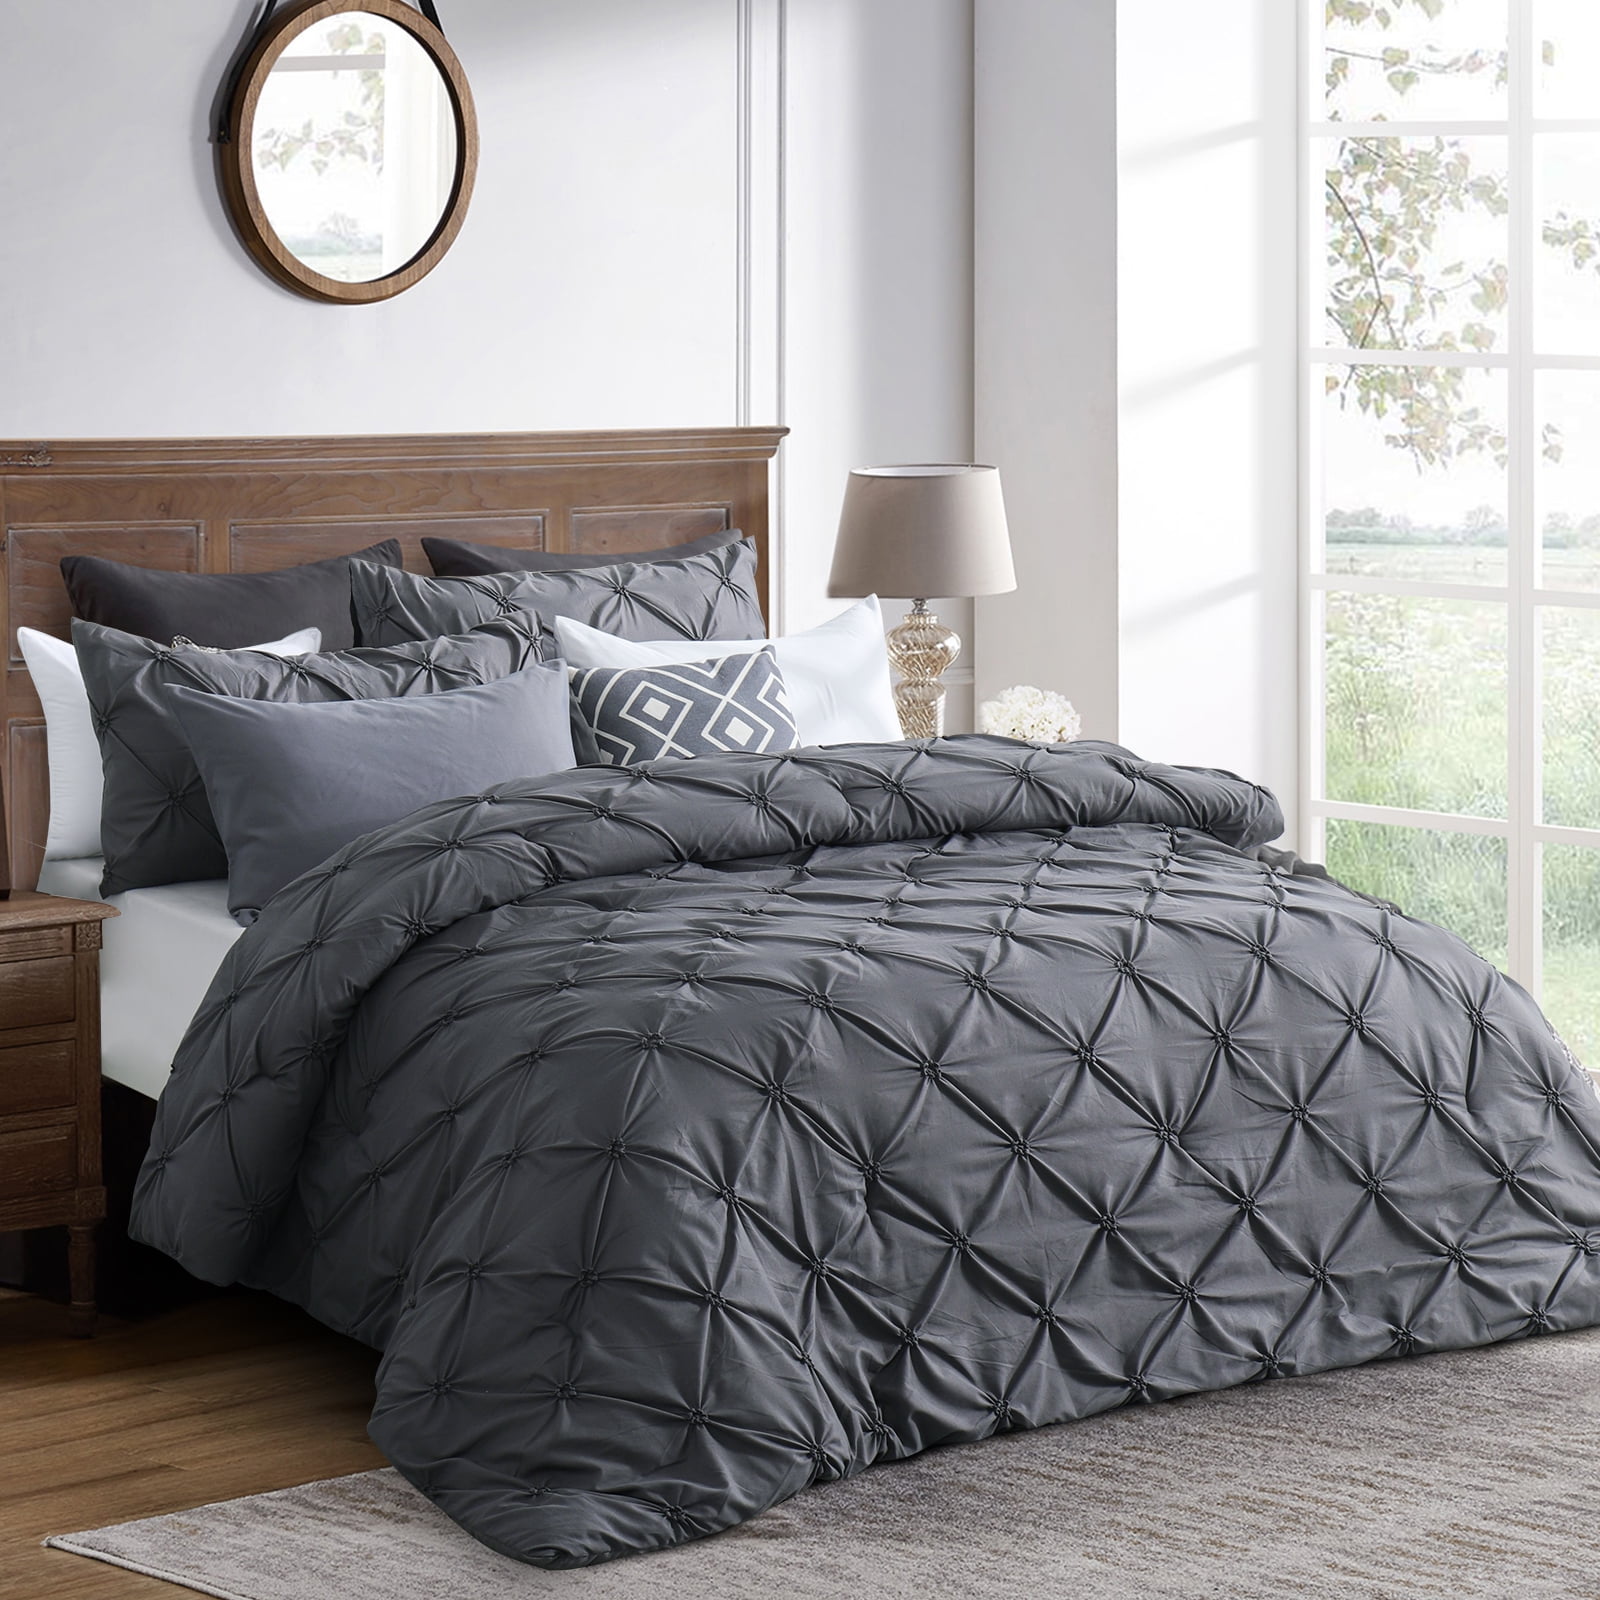 RUIKASI Dark Gray King Comforter Set - Soft and Fluffy Bedding 3